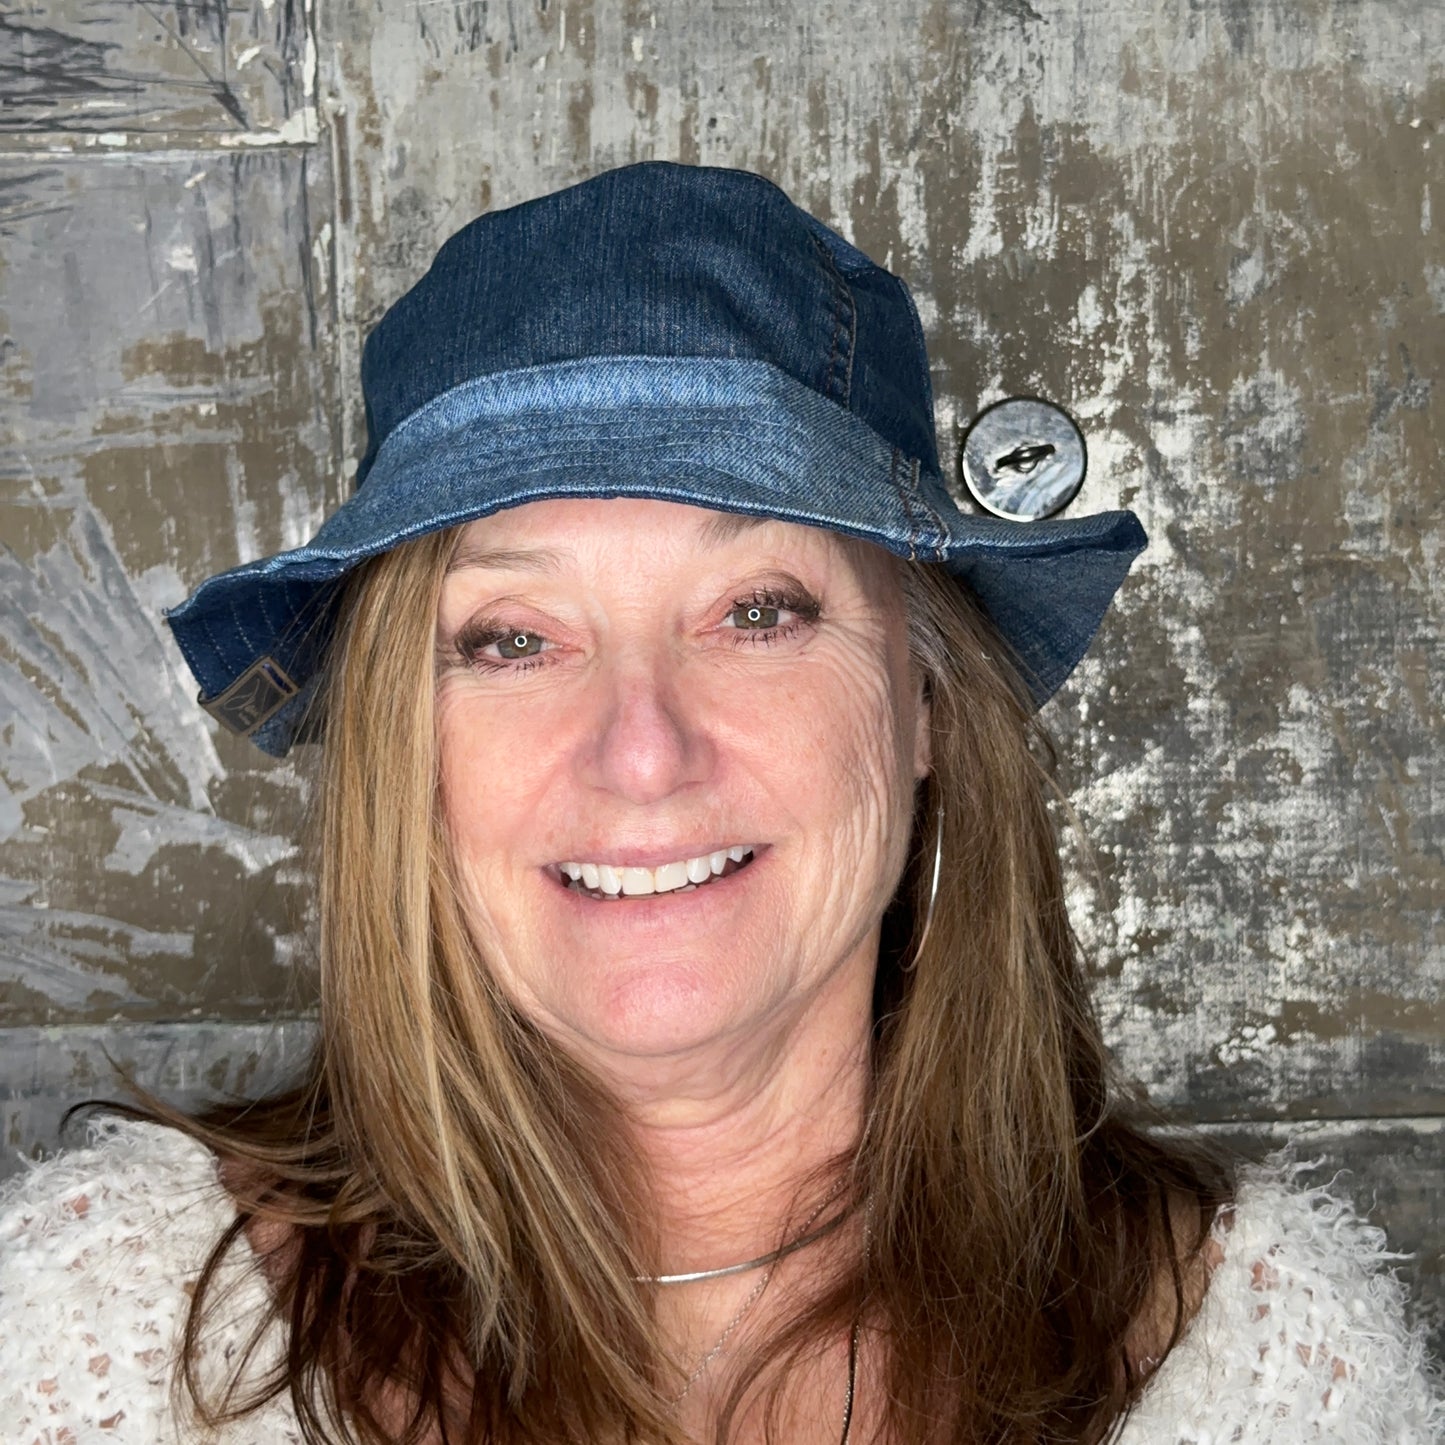 shades of blue patchwork denim reversible bucket hat